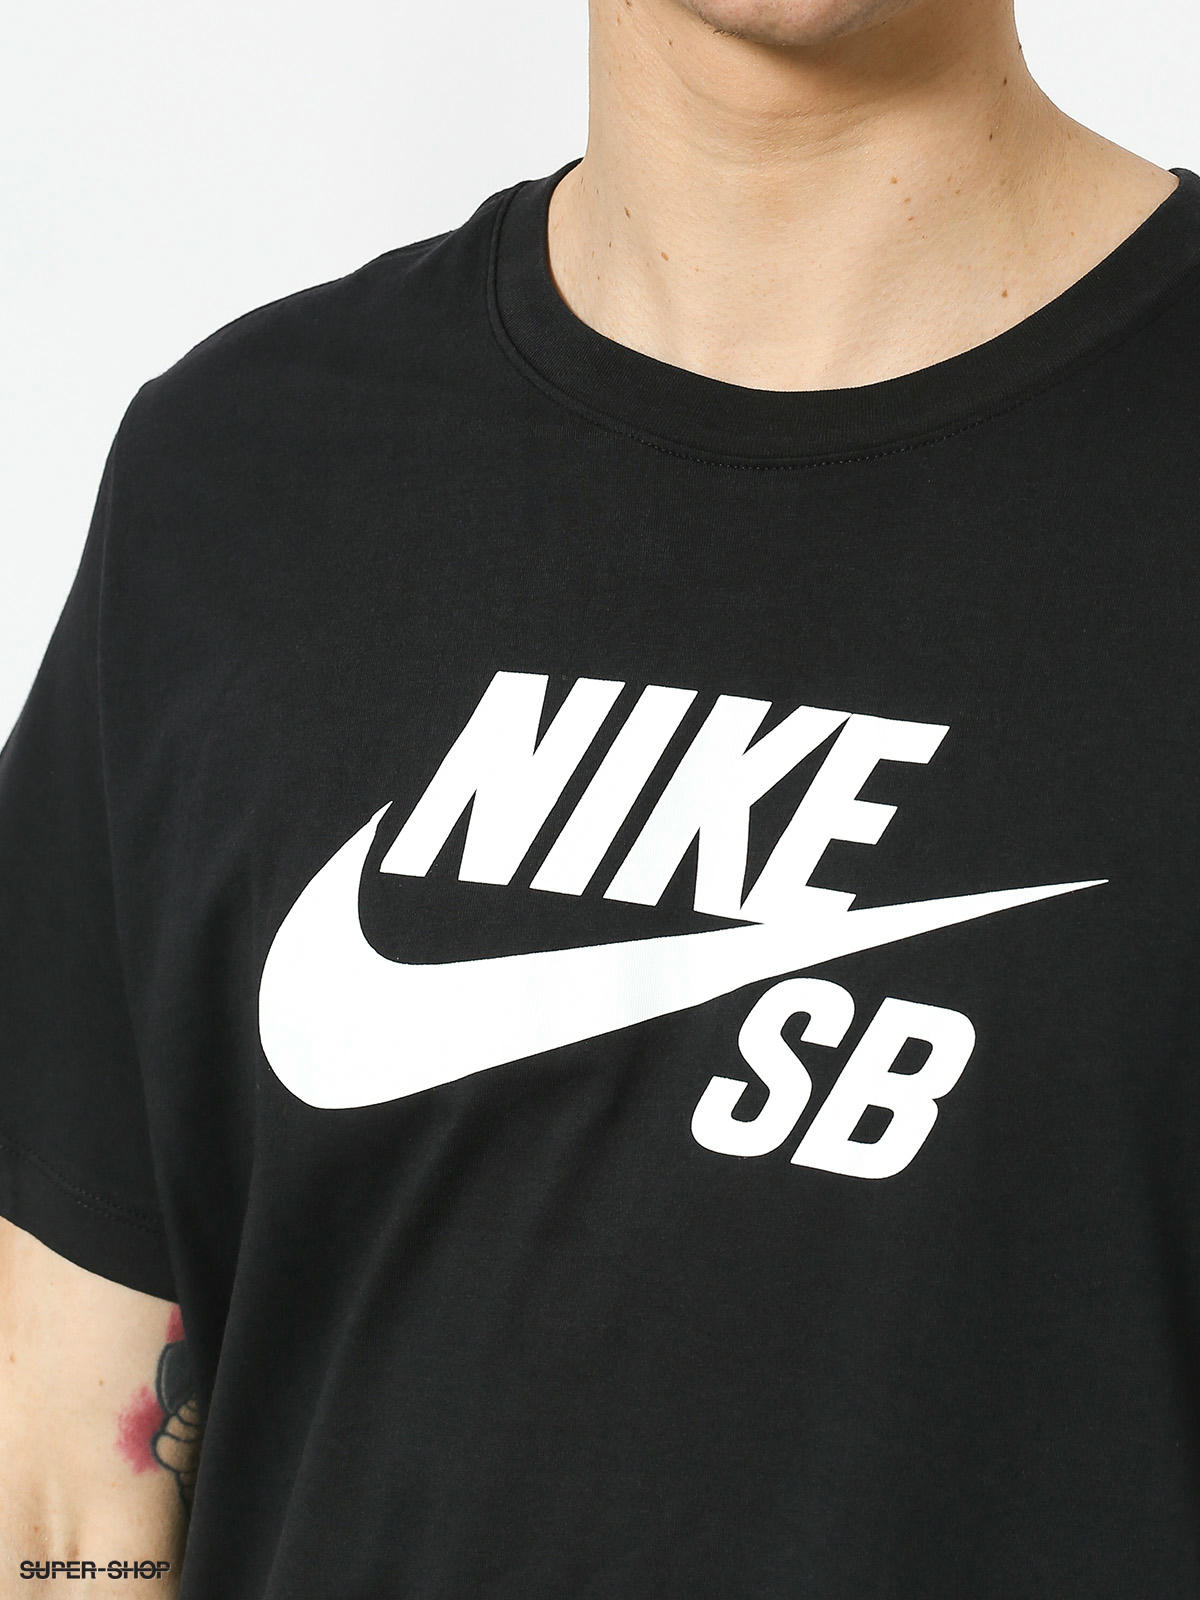 black nike sb shirt